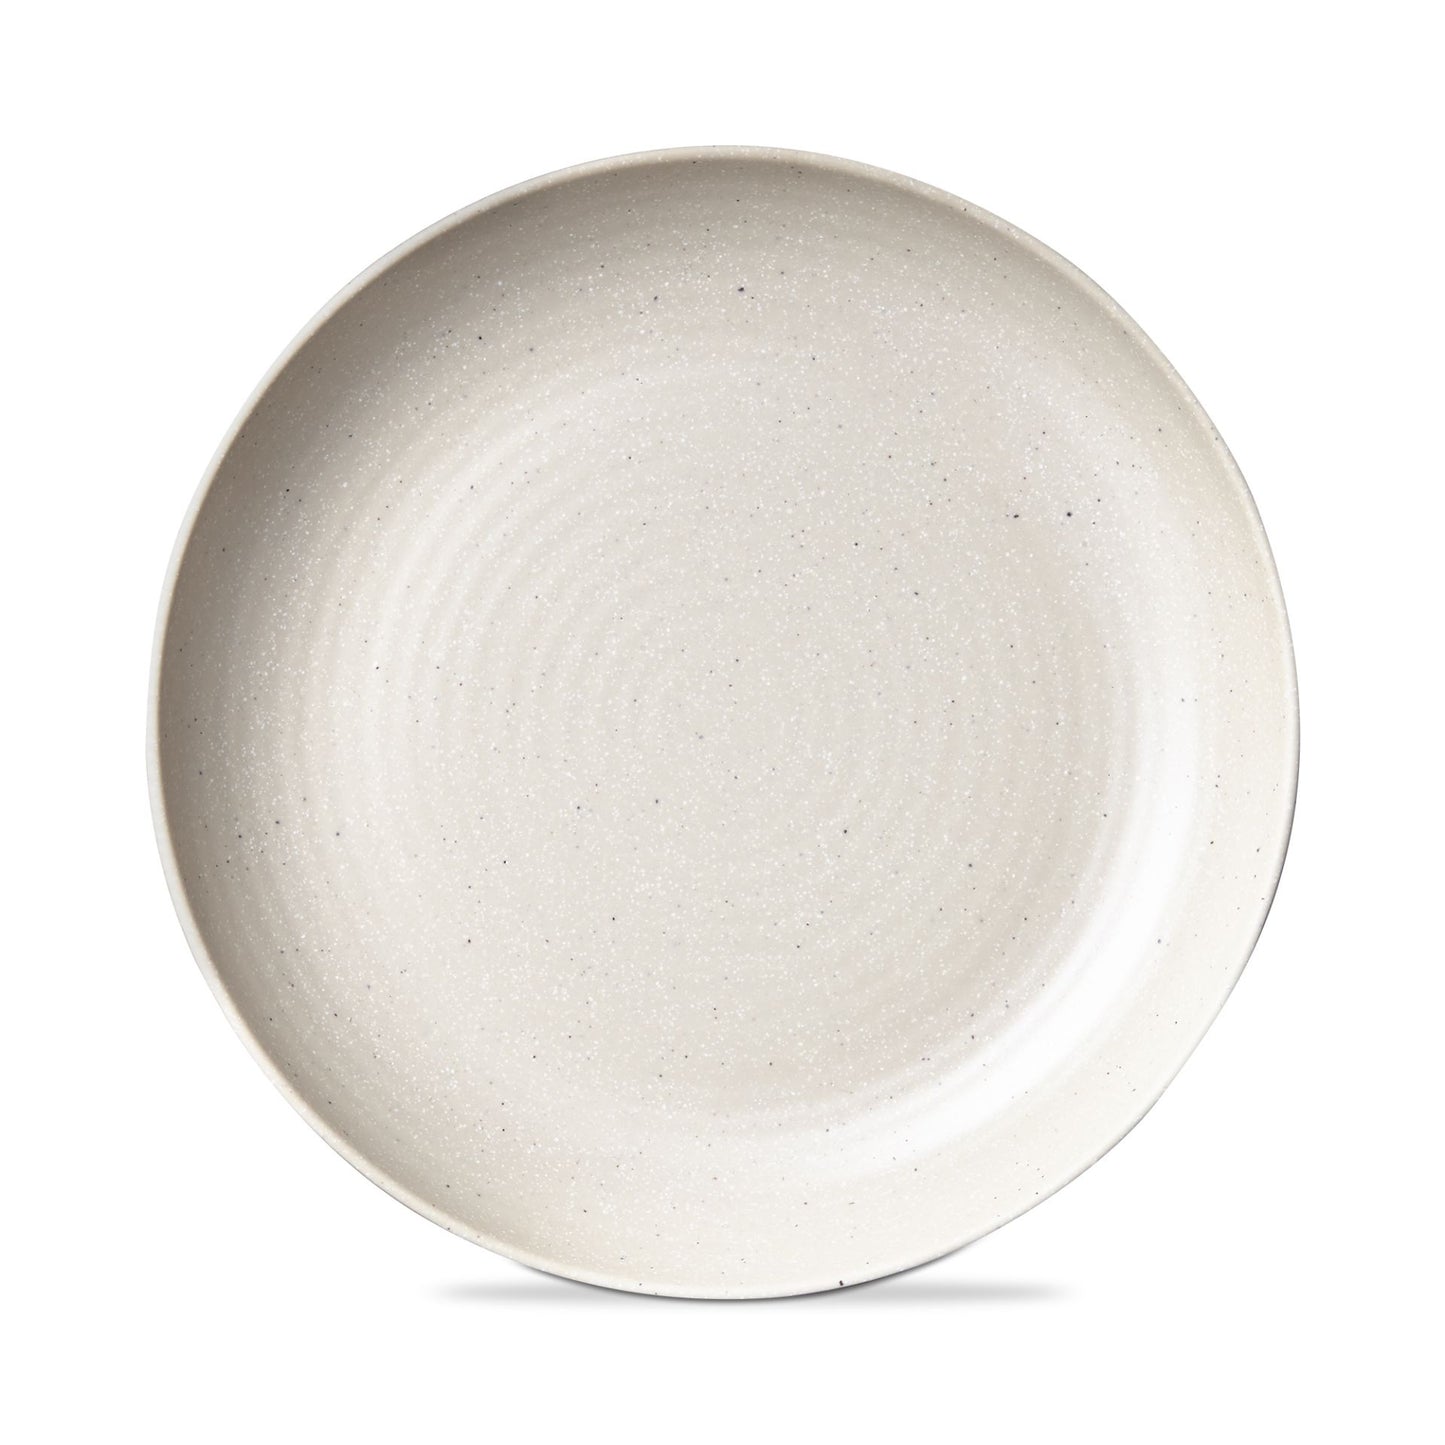 cream Brooklyn Melamine Dinner Plate on a white background.